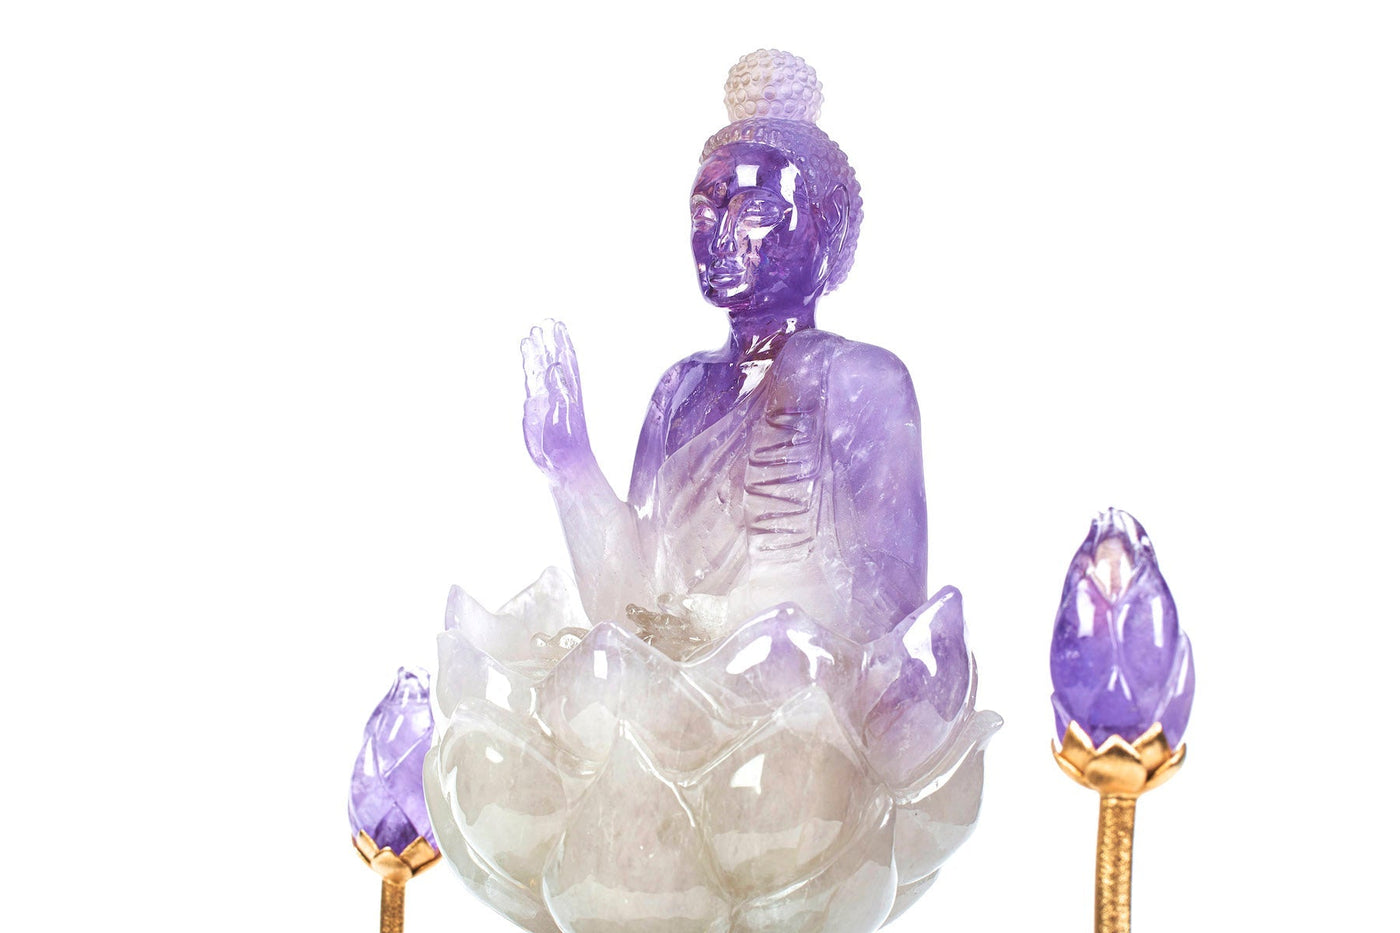 Fine Art Ametrine sculpture "Gautama Buddha on Lotus" - Surround Art & Diamonds Sculpture by L'Aquart